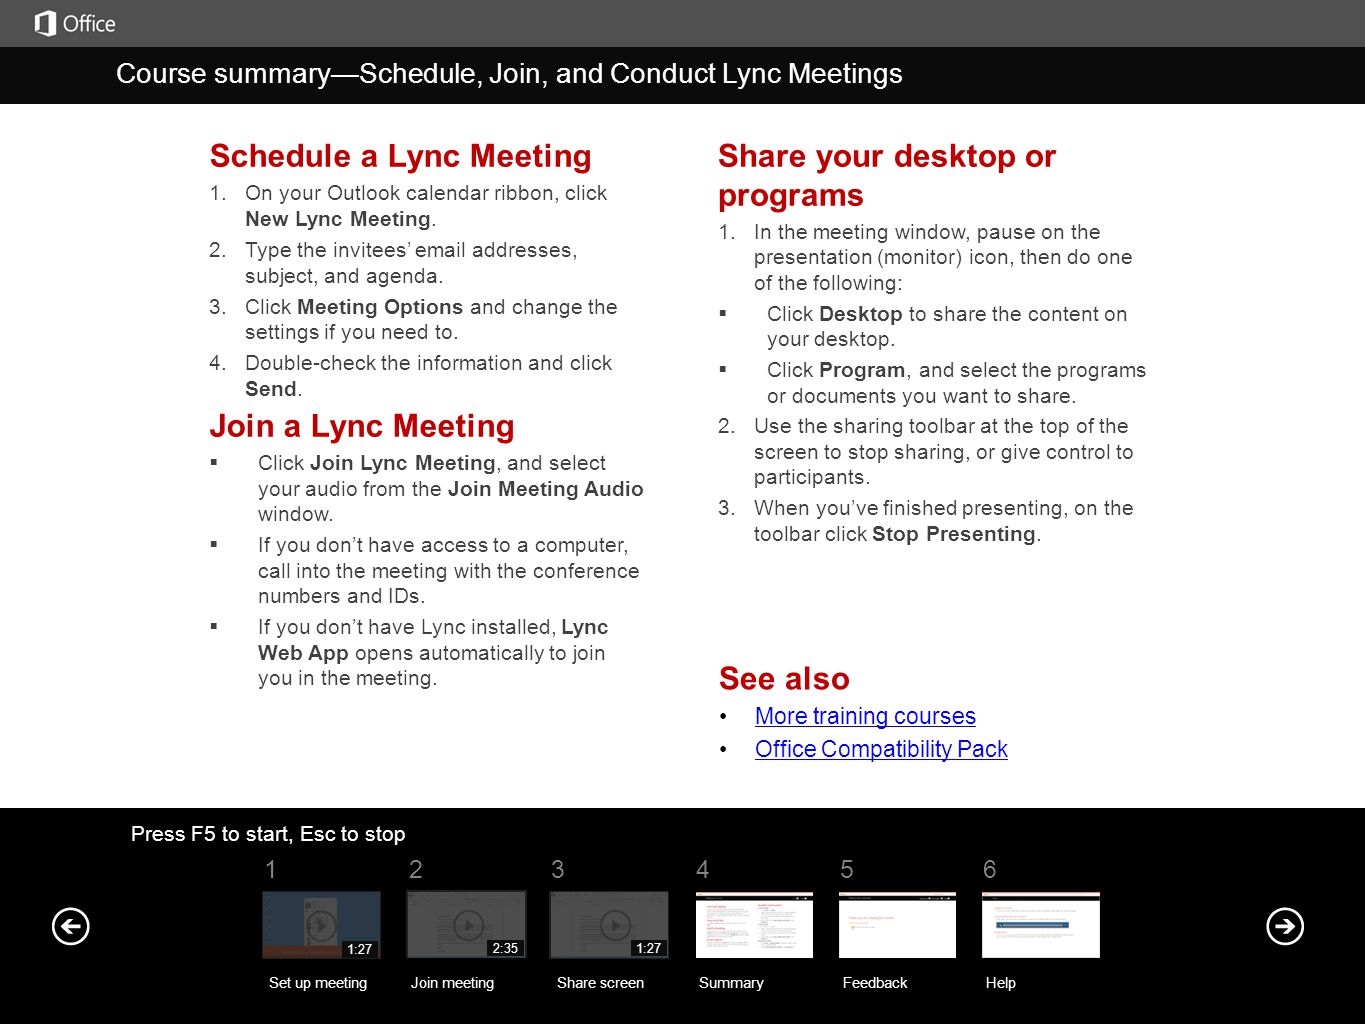 Schedule a Lync Meeting 1. On your Outlook calendar ribbon, click New Lync Meeting.